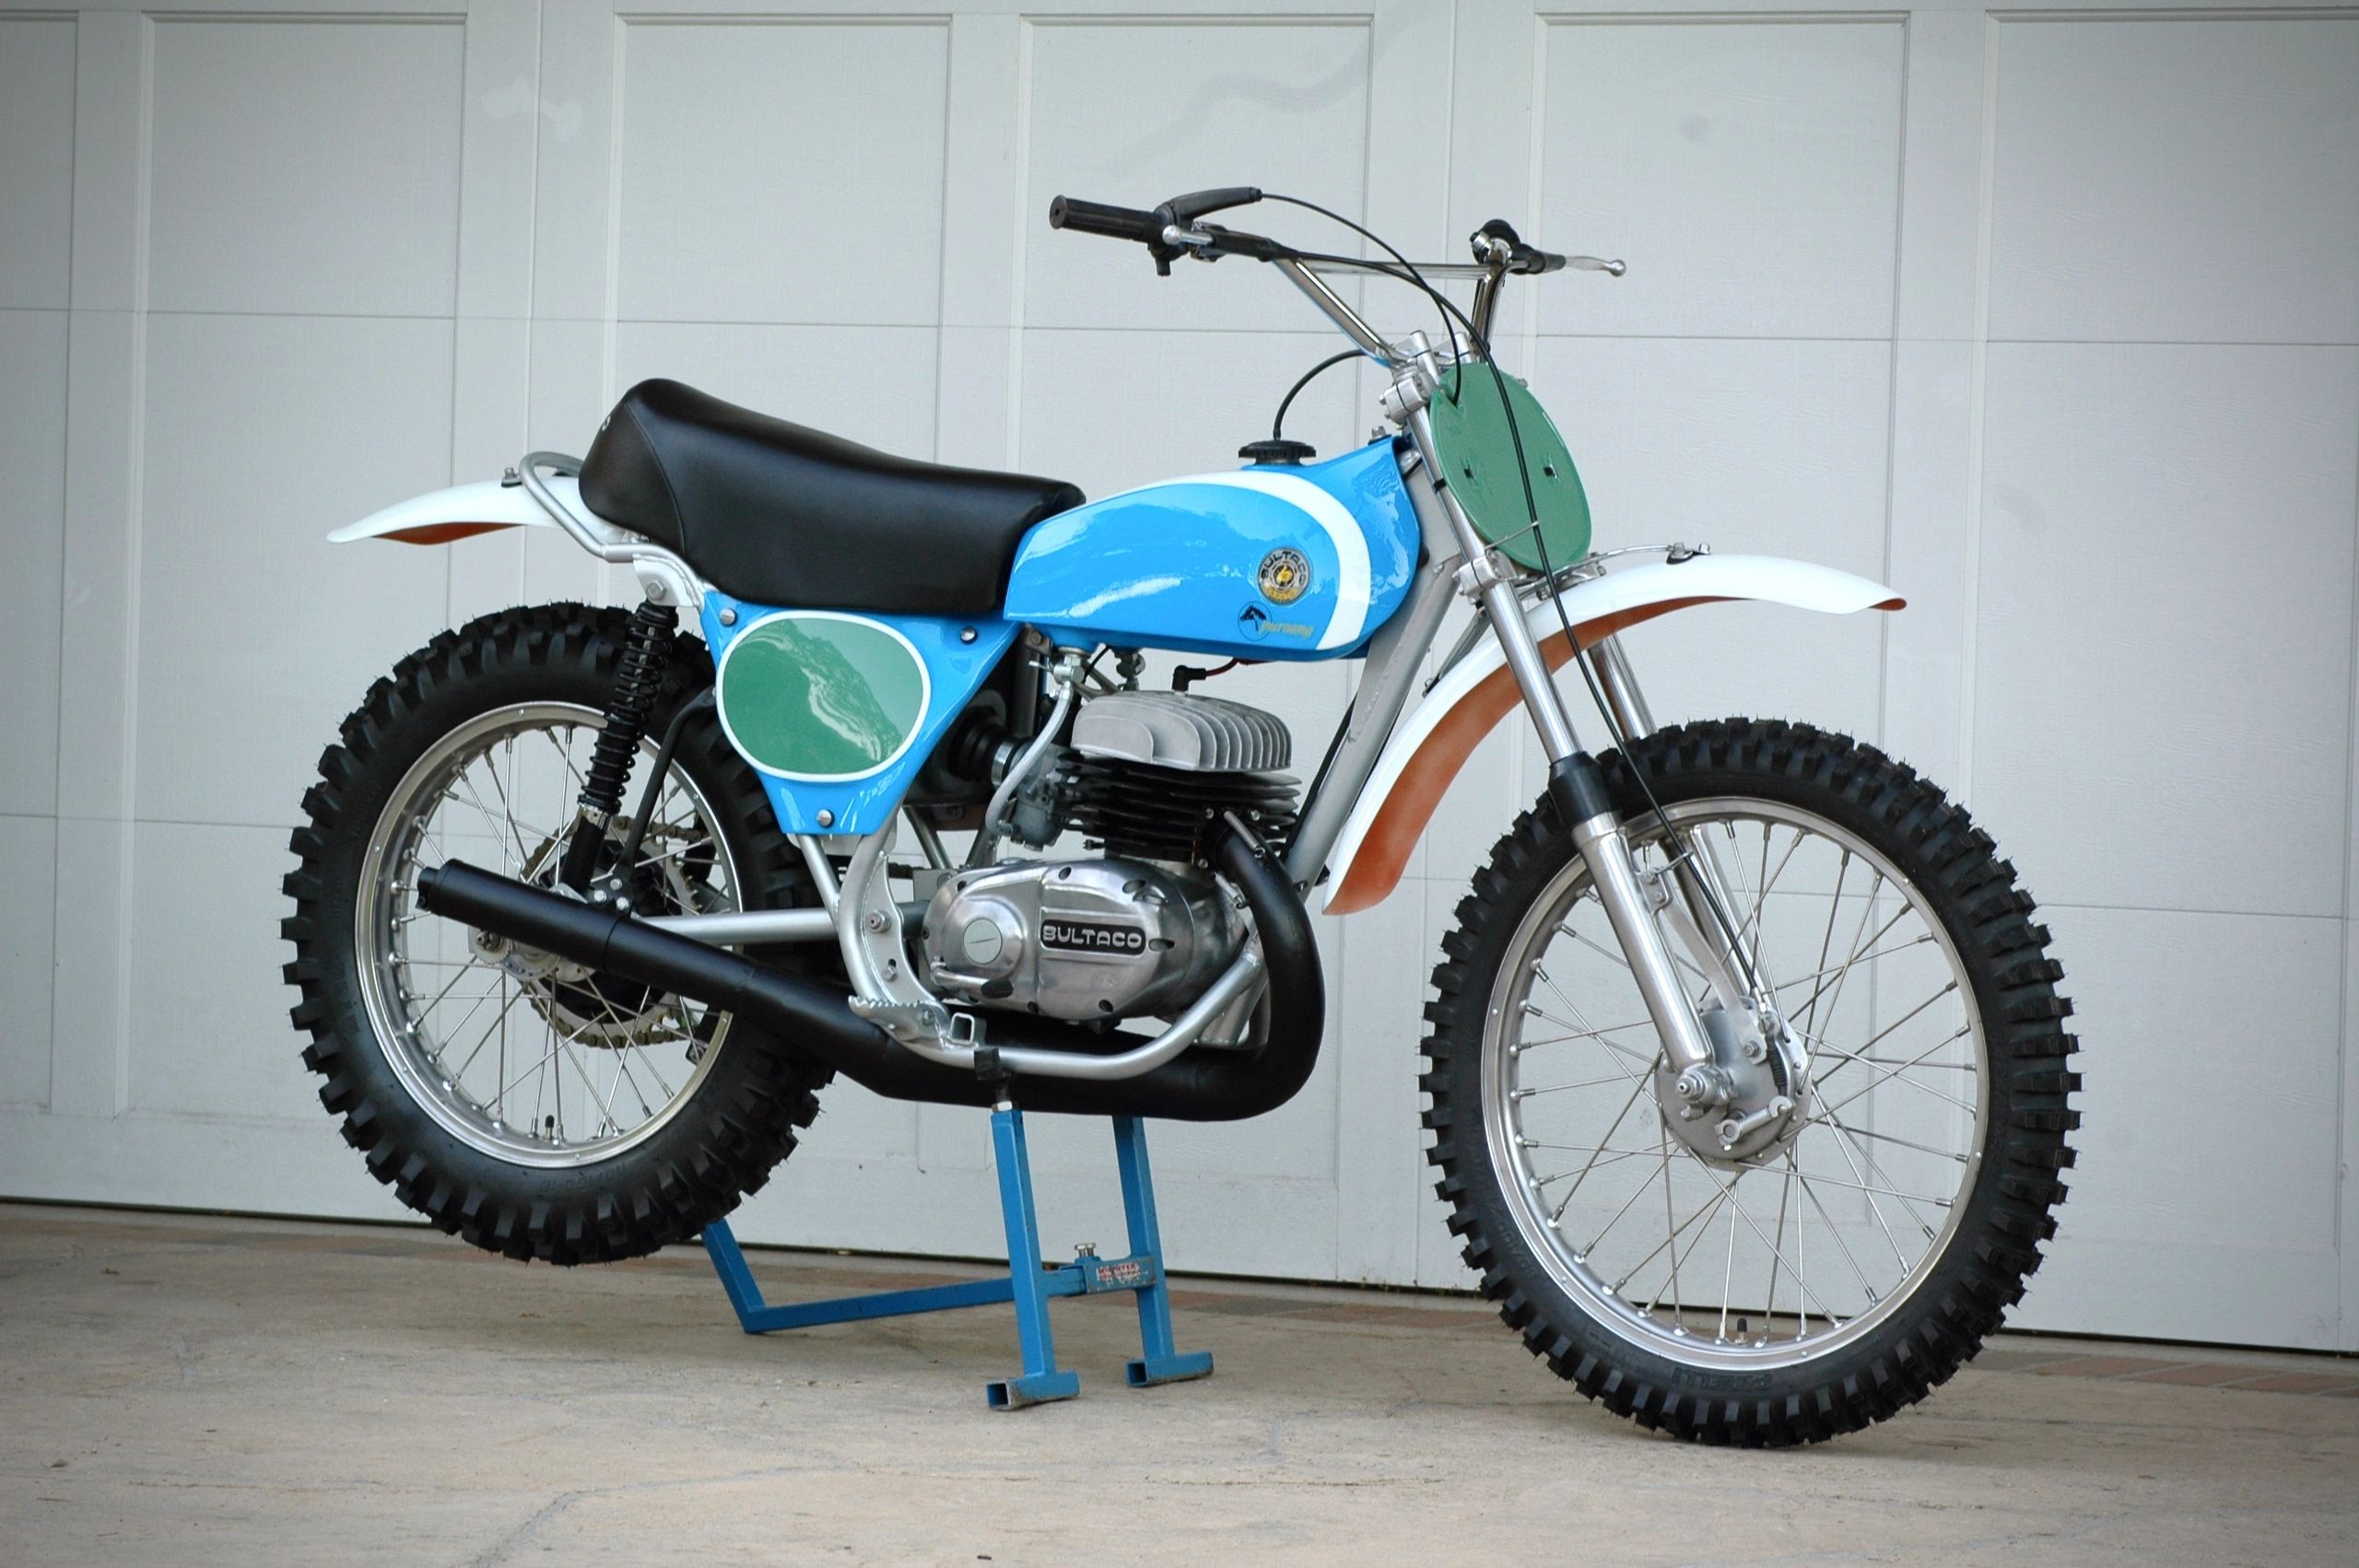 1974 Bultaco 250 Pursang vintage motocross bike restoration